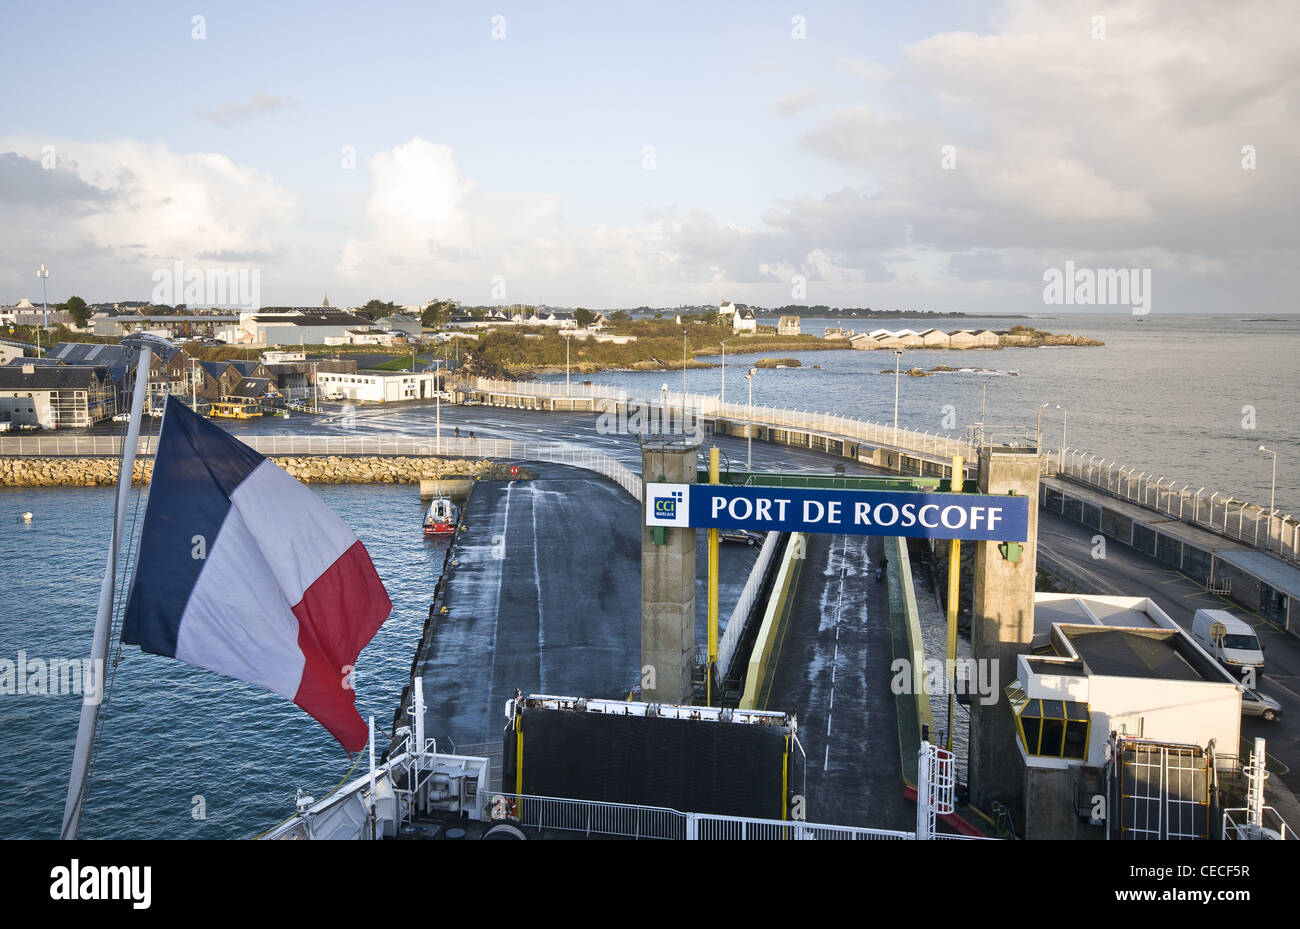 Transporter ferry docked at Port De Roscoff, France Stock Photo